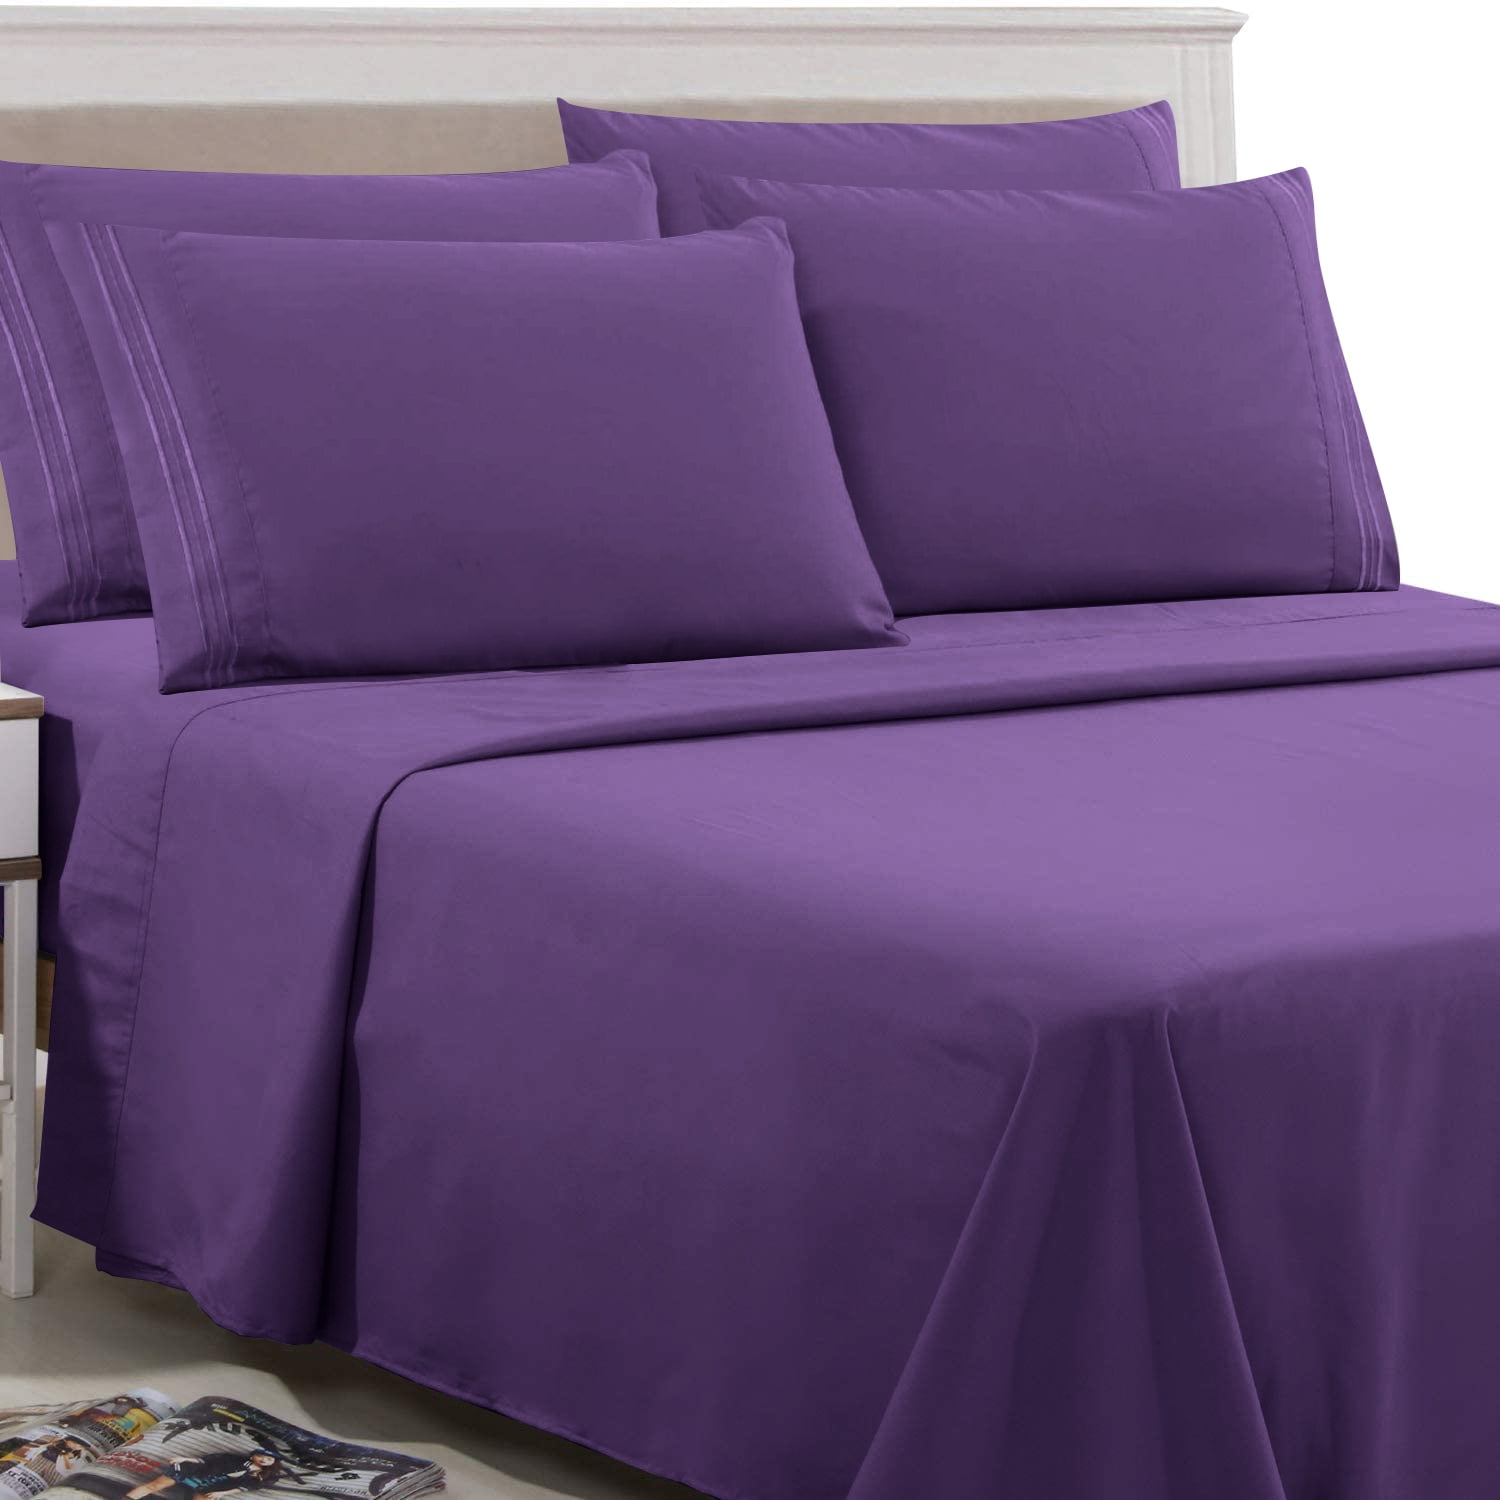 Details about   Fabulous Bedding Sheets 6 PCs 1200TC Egyptian Cotton UK Super King All Color 